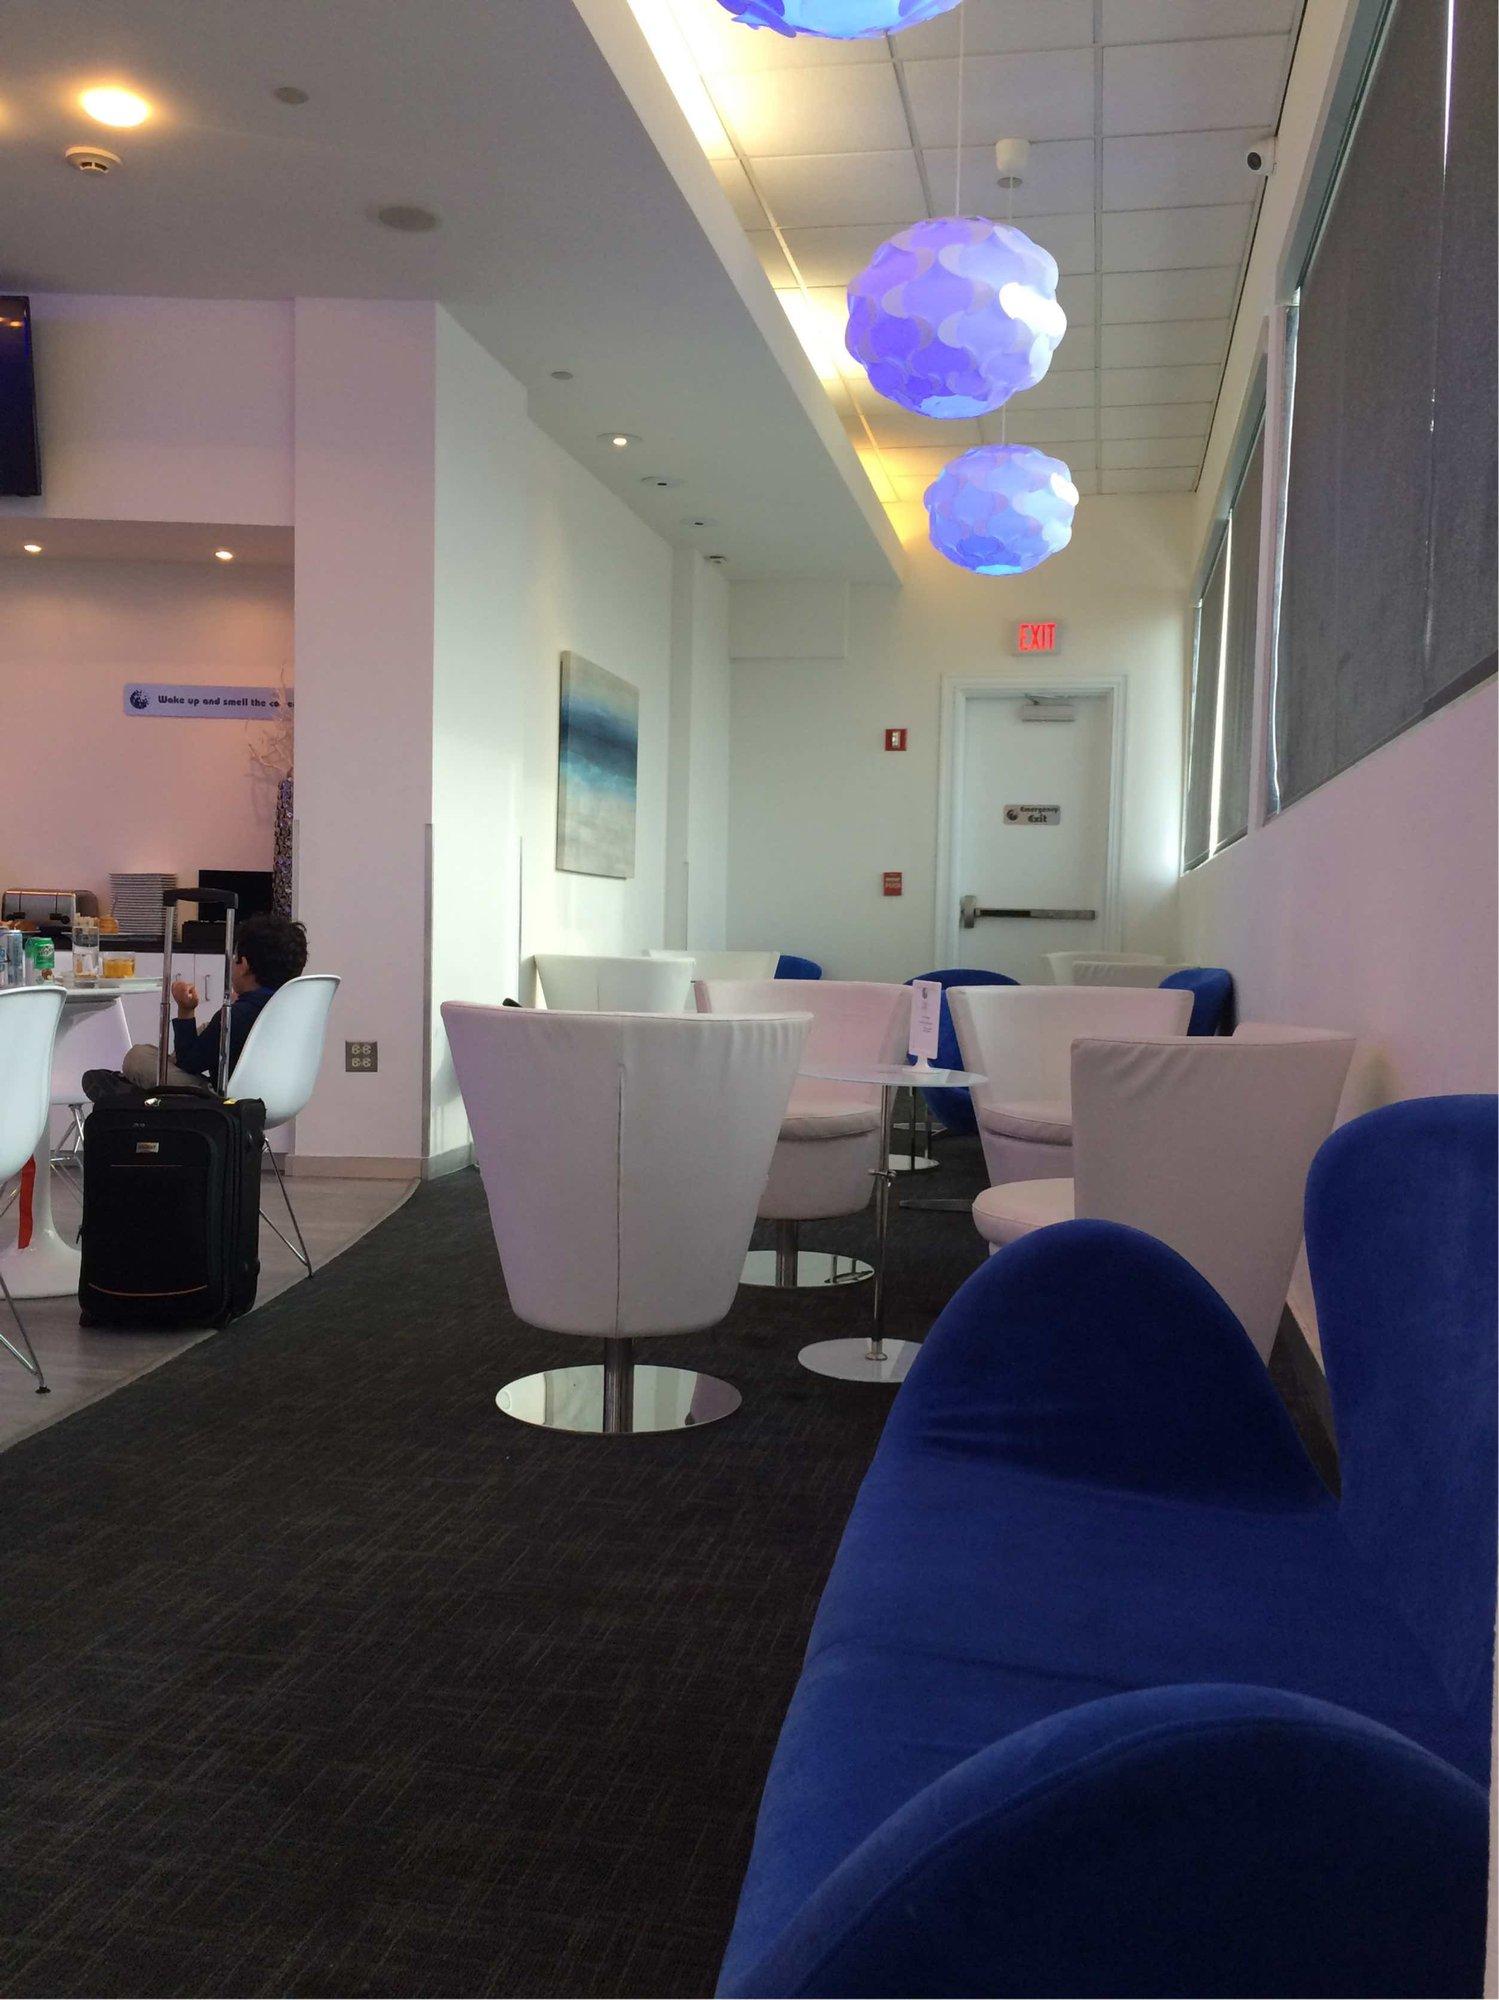 The Lounge San Juan at Terminal C image 17 of 67